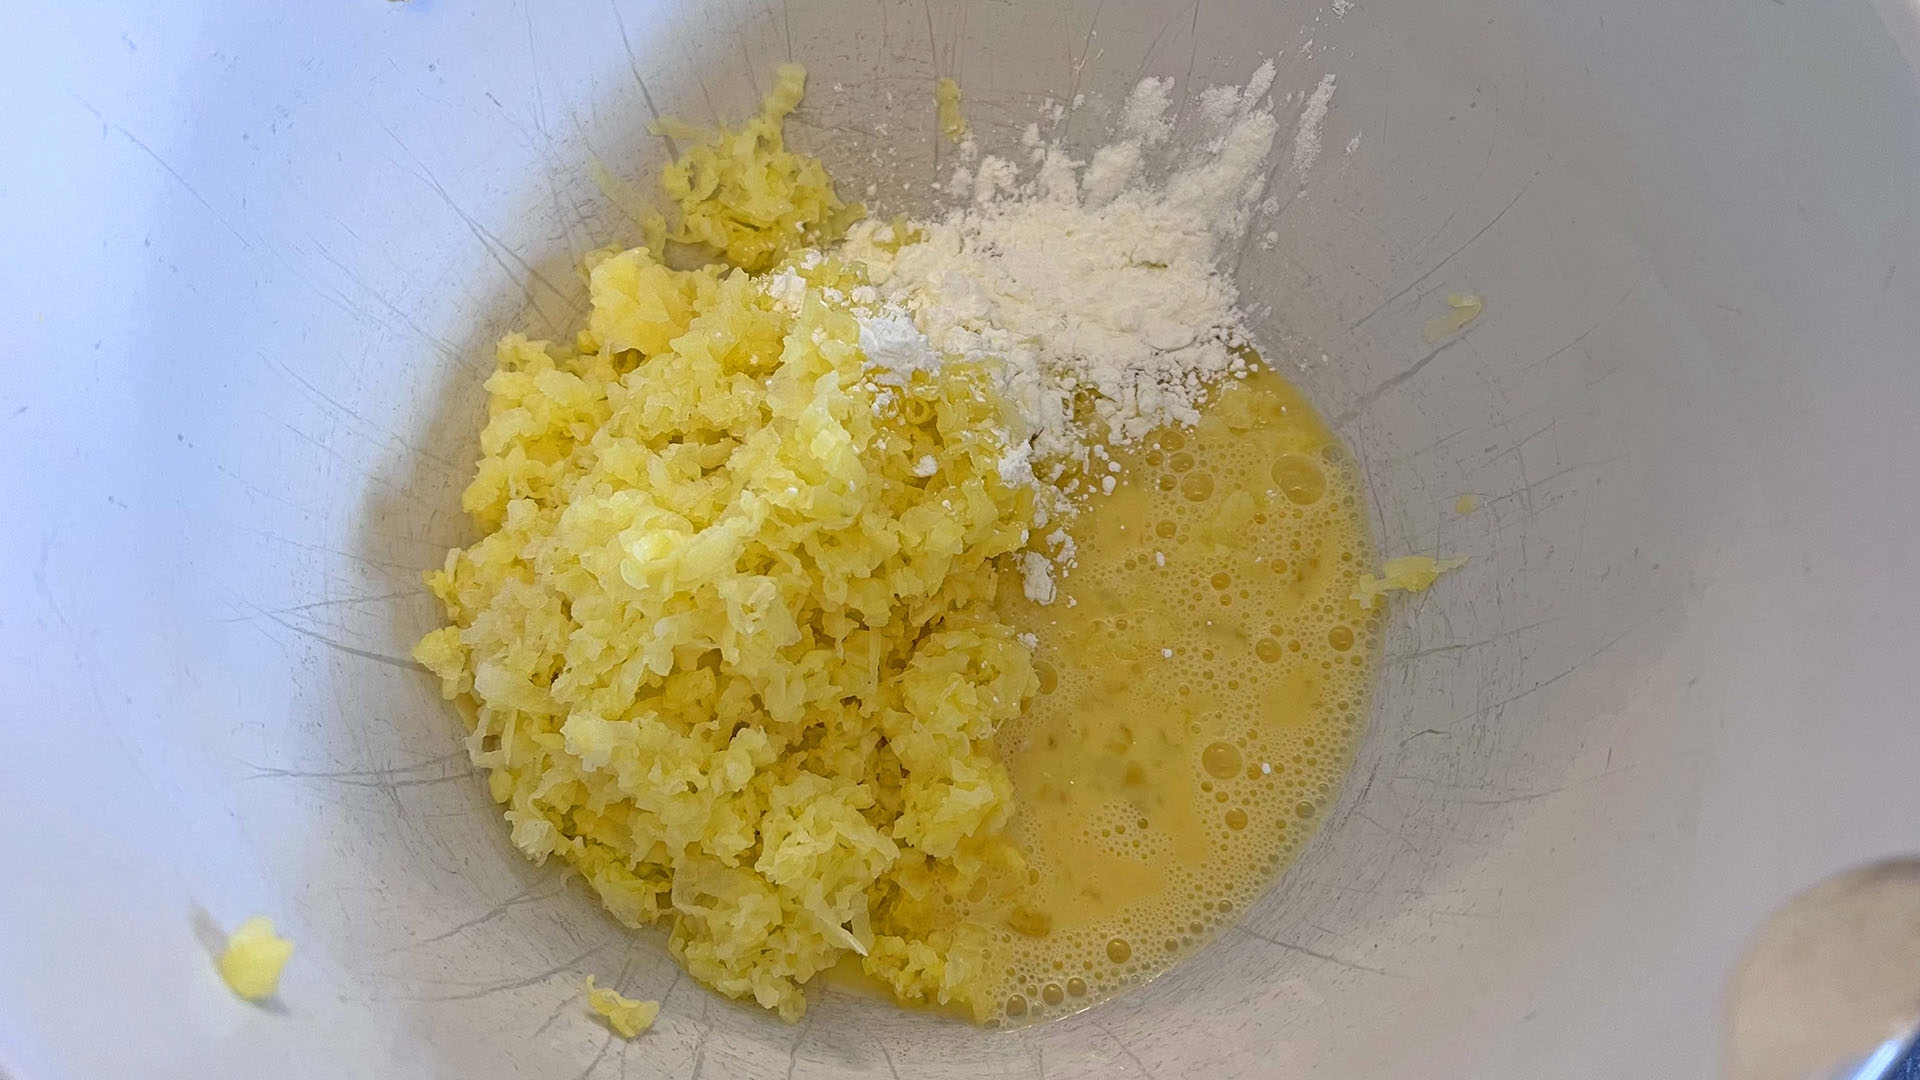 Grated potato mixture with flour